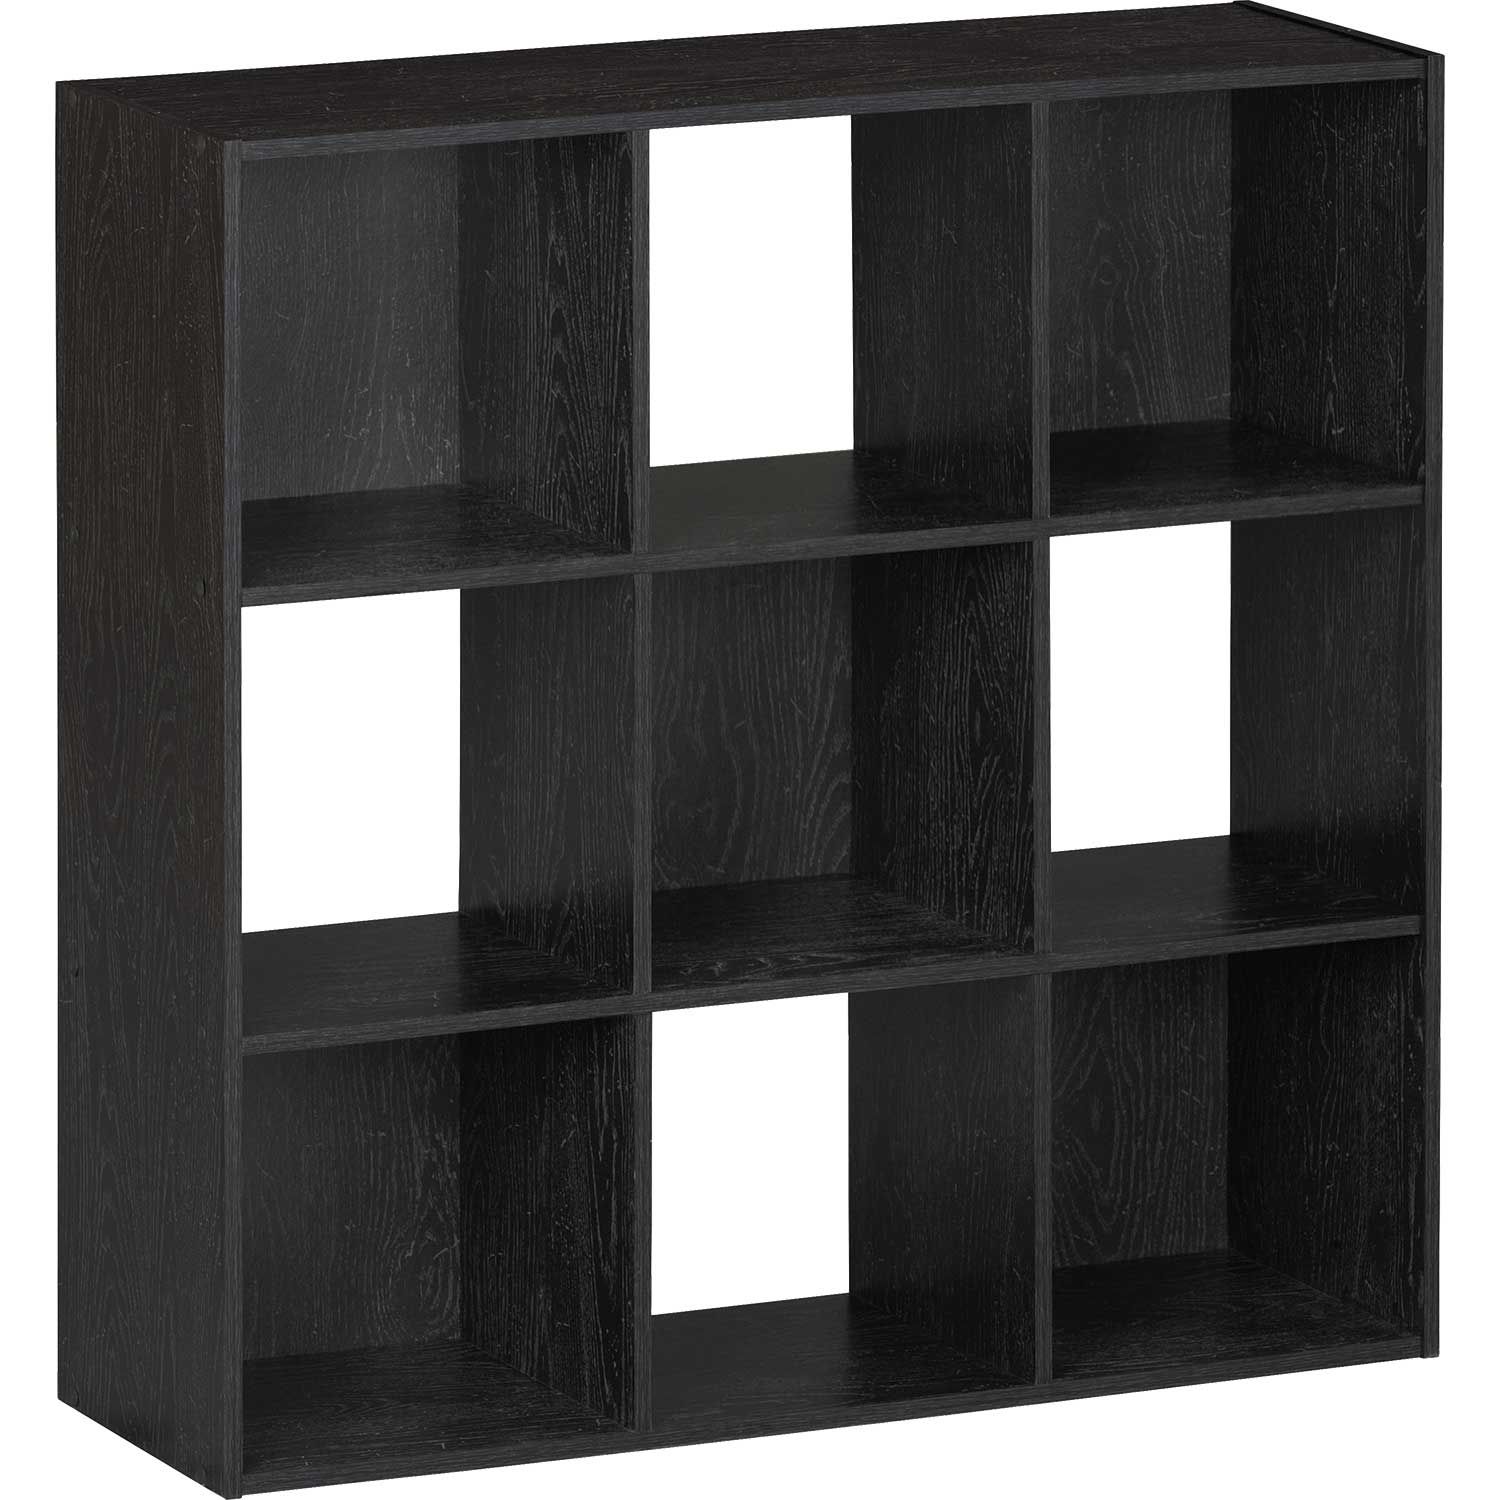 Systembuild Black Nine Cube Storage Bookshelf 7642b Ameriwood